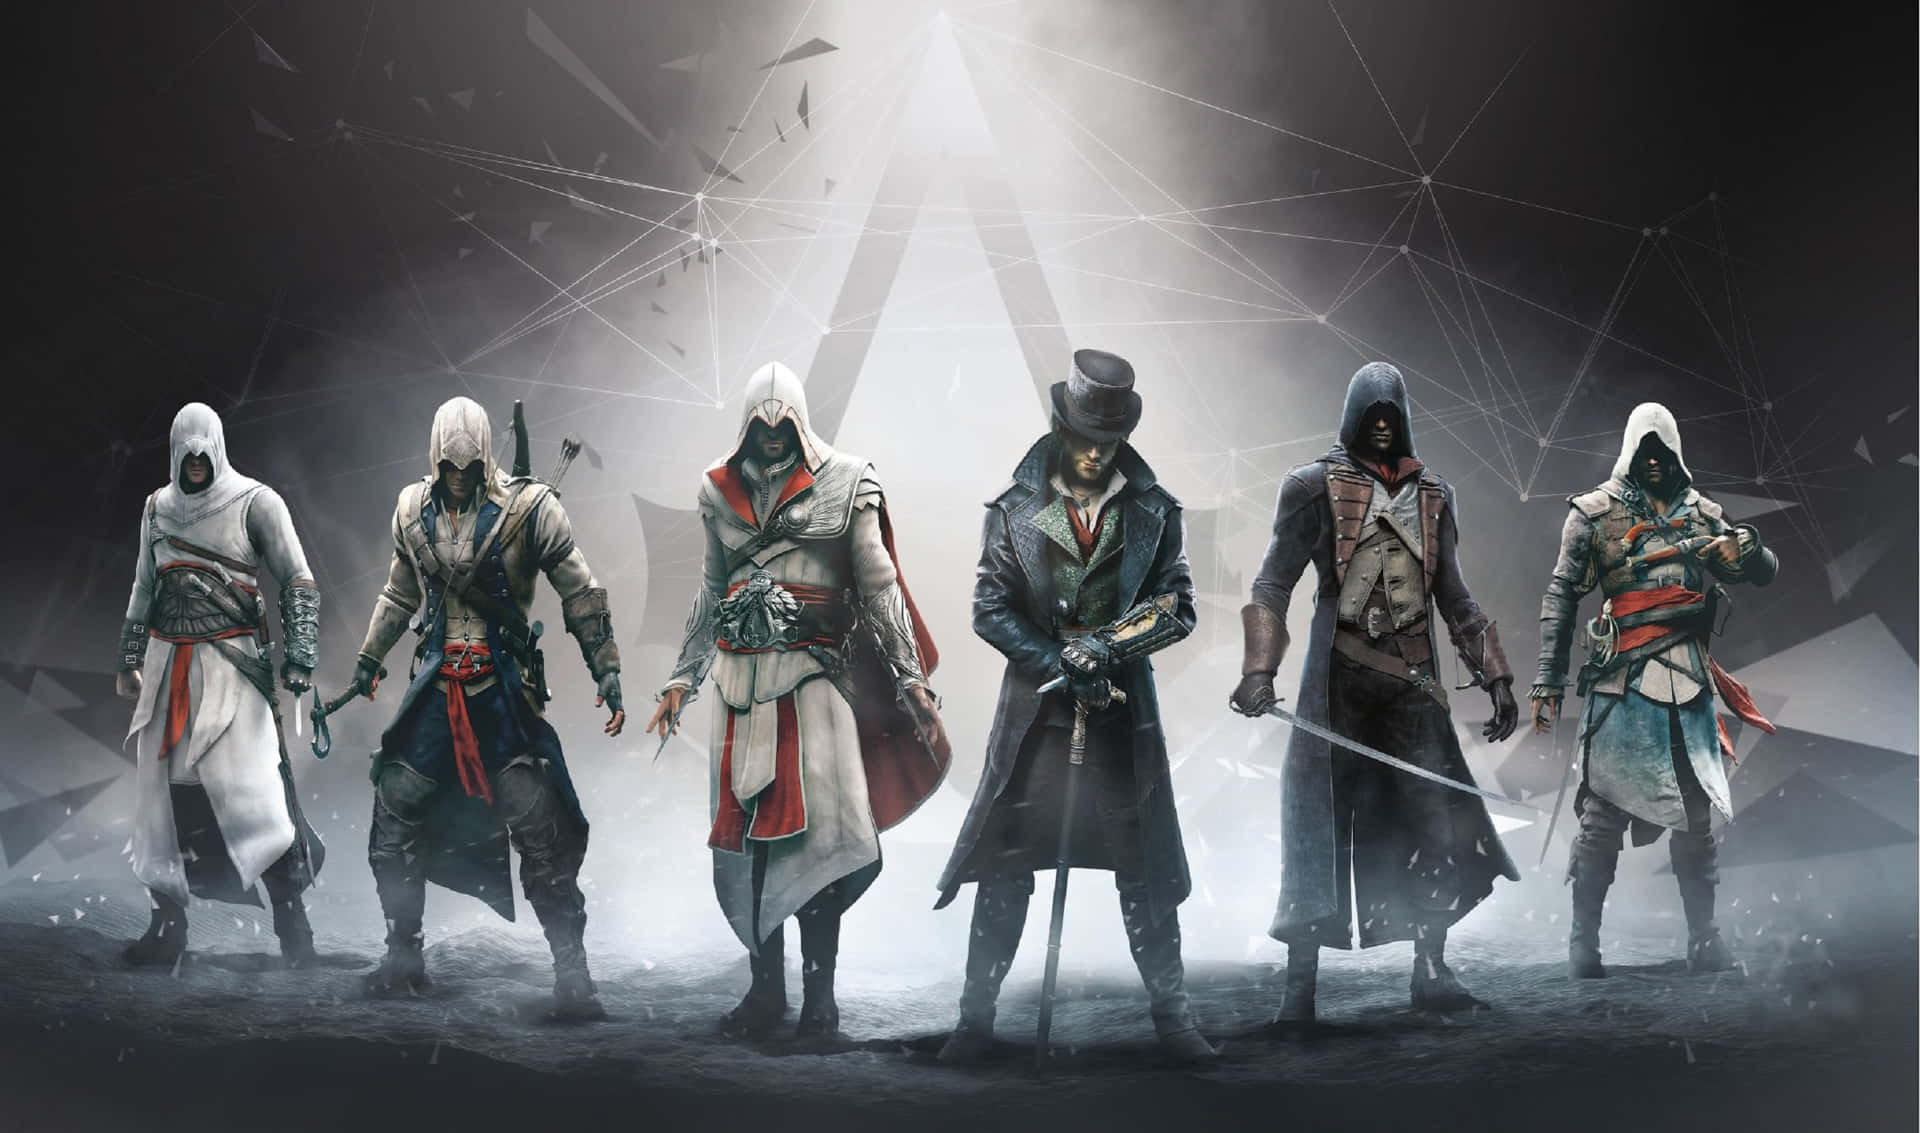 2440x1440bakgrundsbild Av Protagonister I Assassin's Creed Odyssey